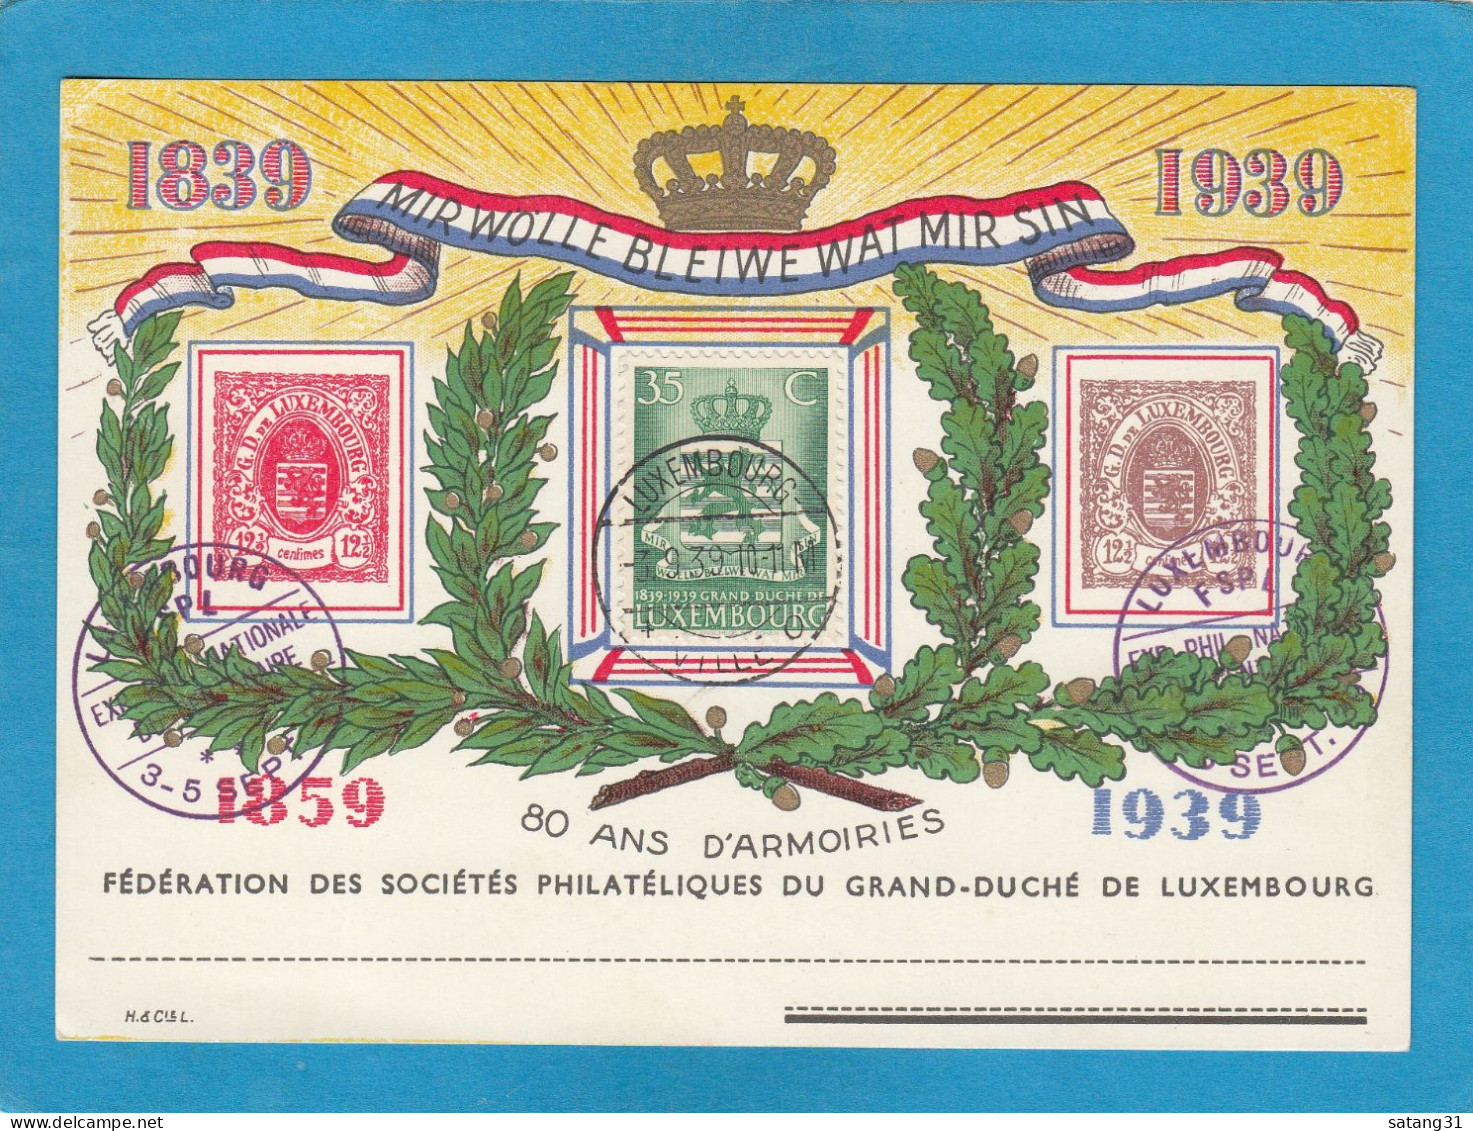 1859-1939, 80 ANS D'ARMOIRIES. - Herdenkingskaarten